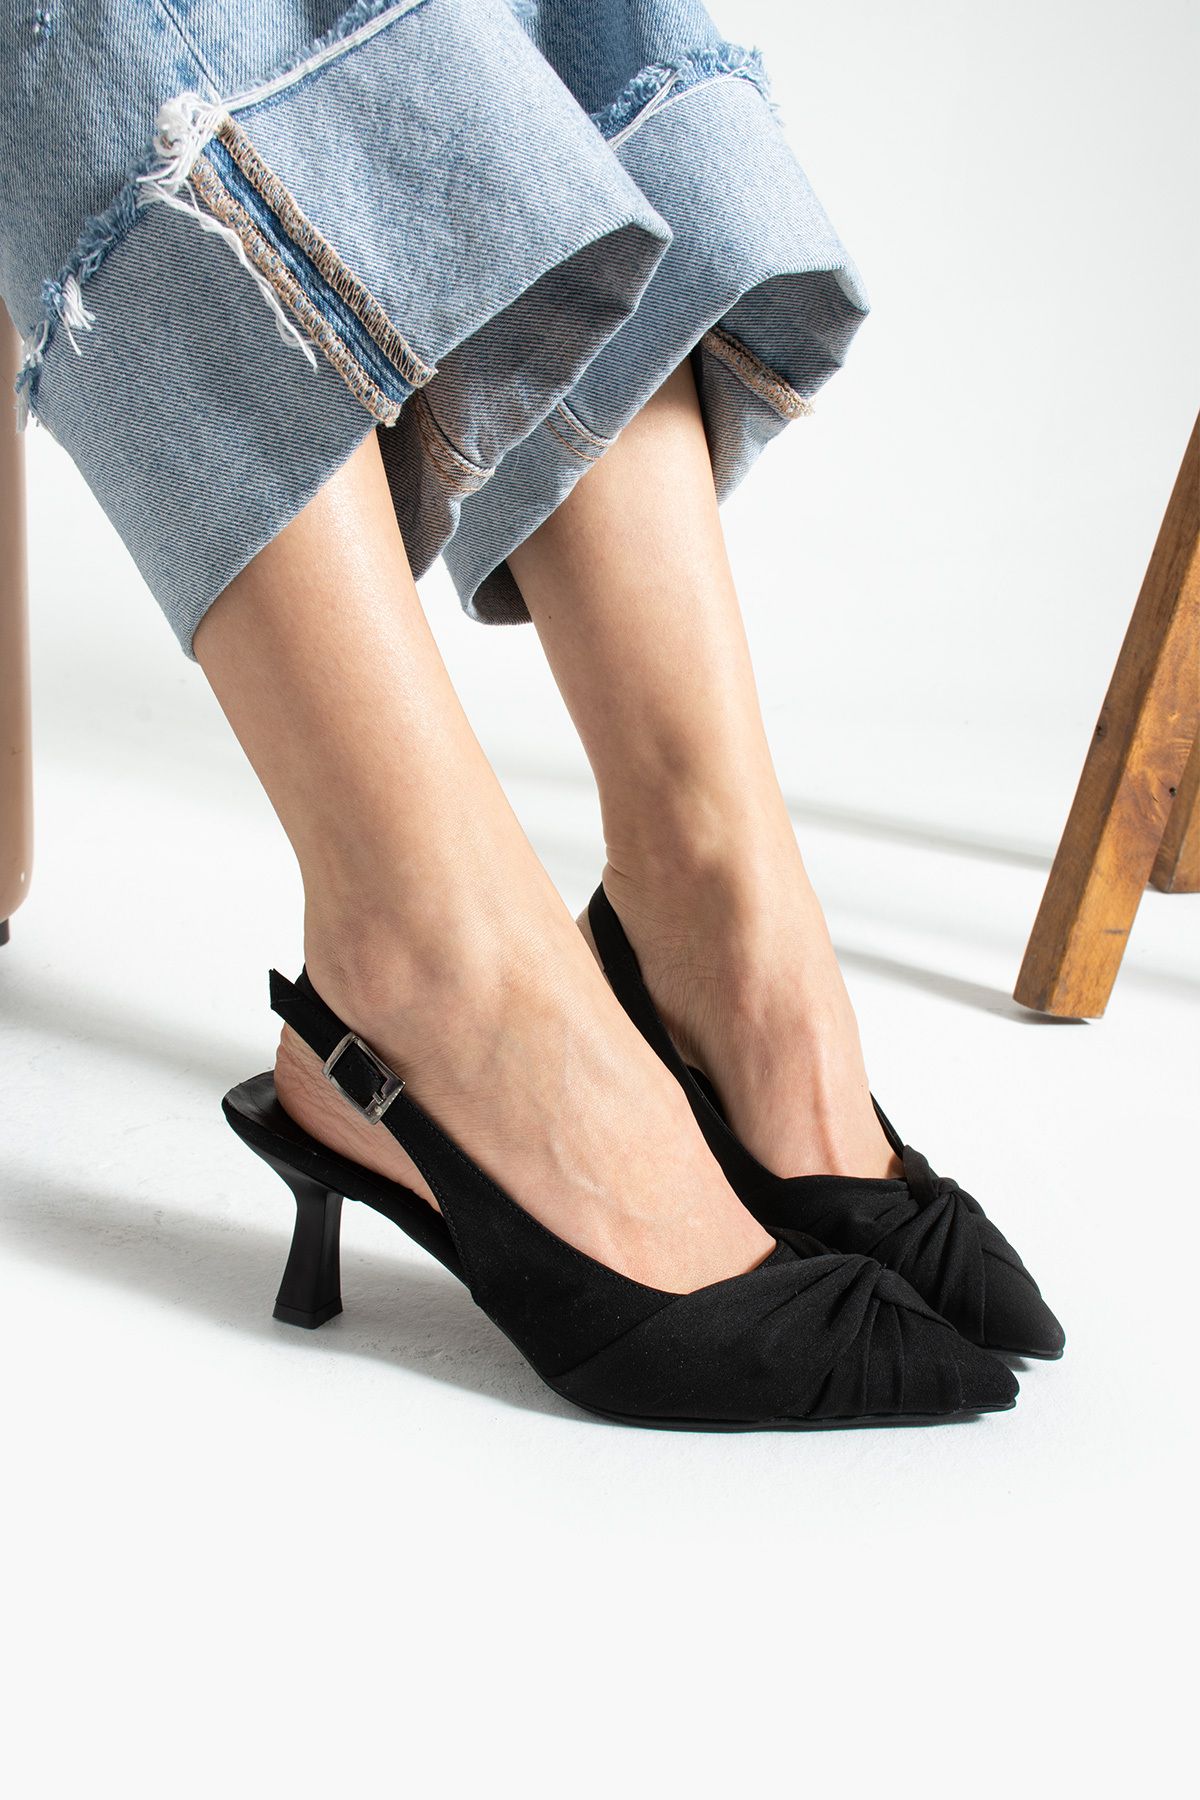 İnan Ayakkabı Kadın Siyah Süet Topuklu Ayakkabı 7 Cm Topuk